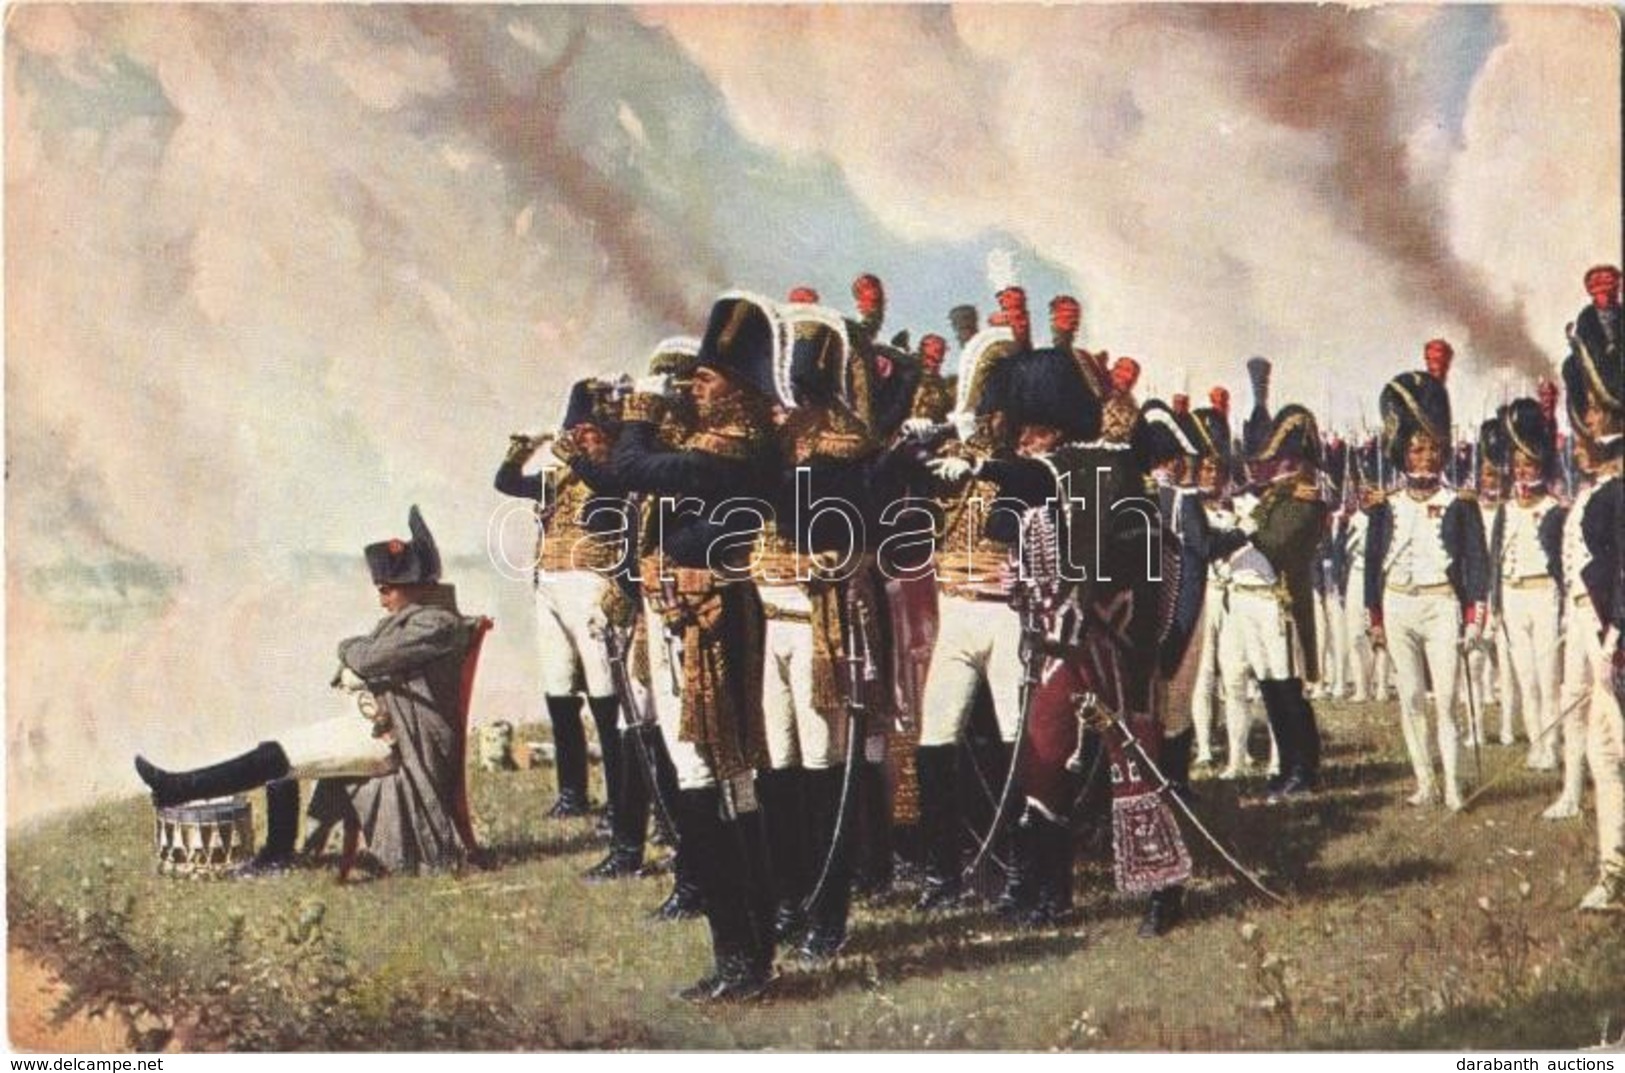 ** T2 Napoleon Sur Les Hauteurs Devant Borodino / Napoleon And His Officers On The Hills Of Borodino, Ser. 25/3. S: Were - Unclassified